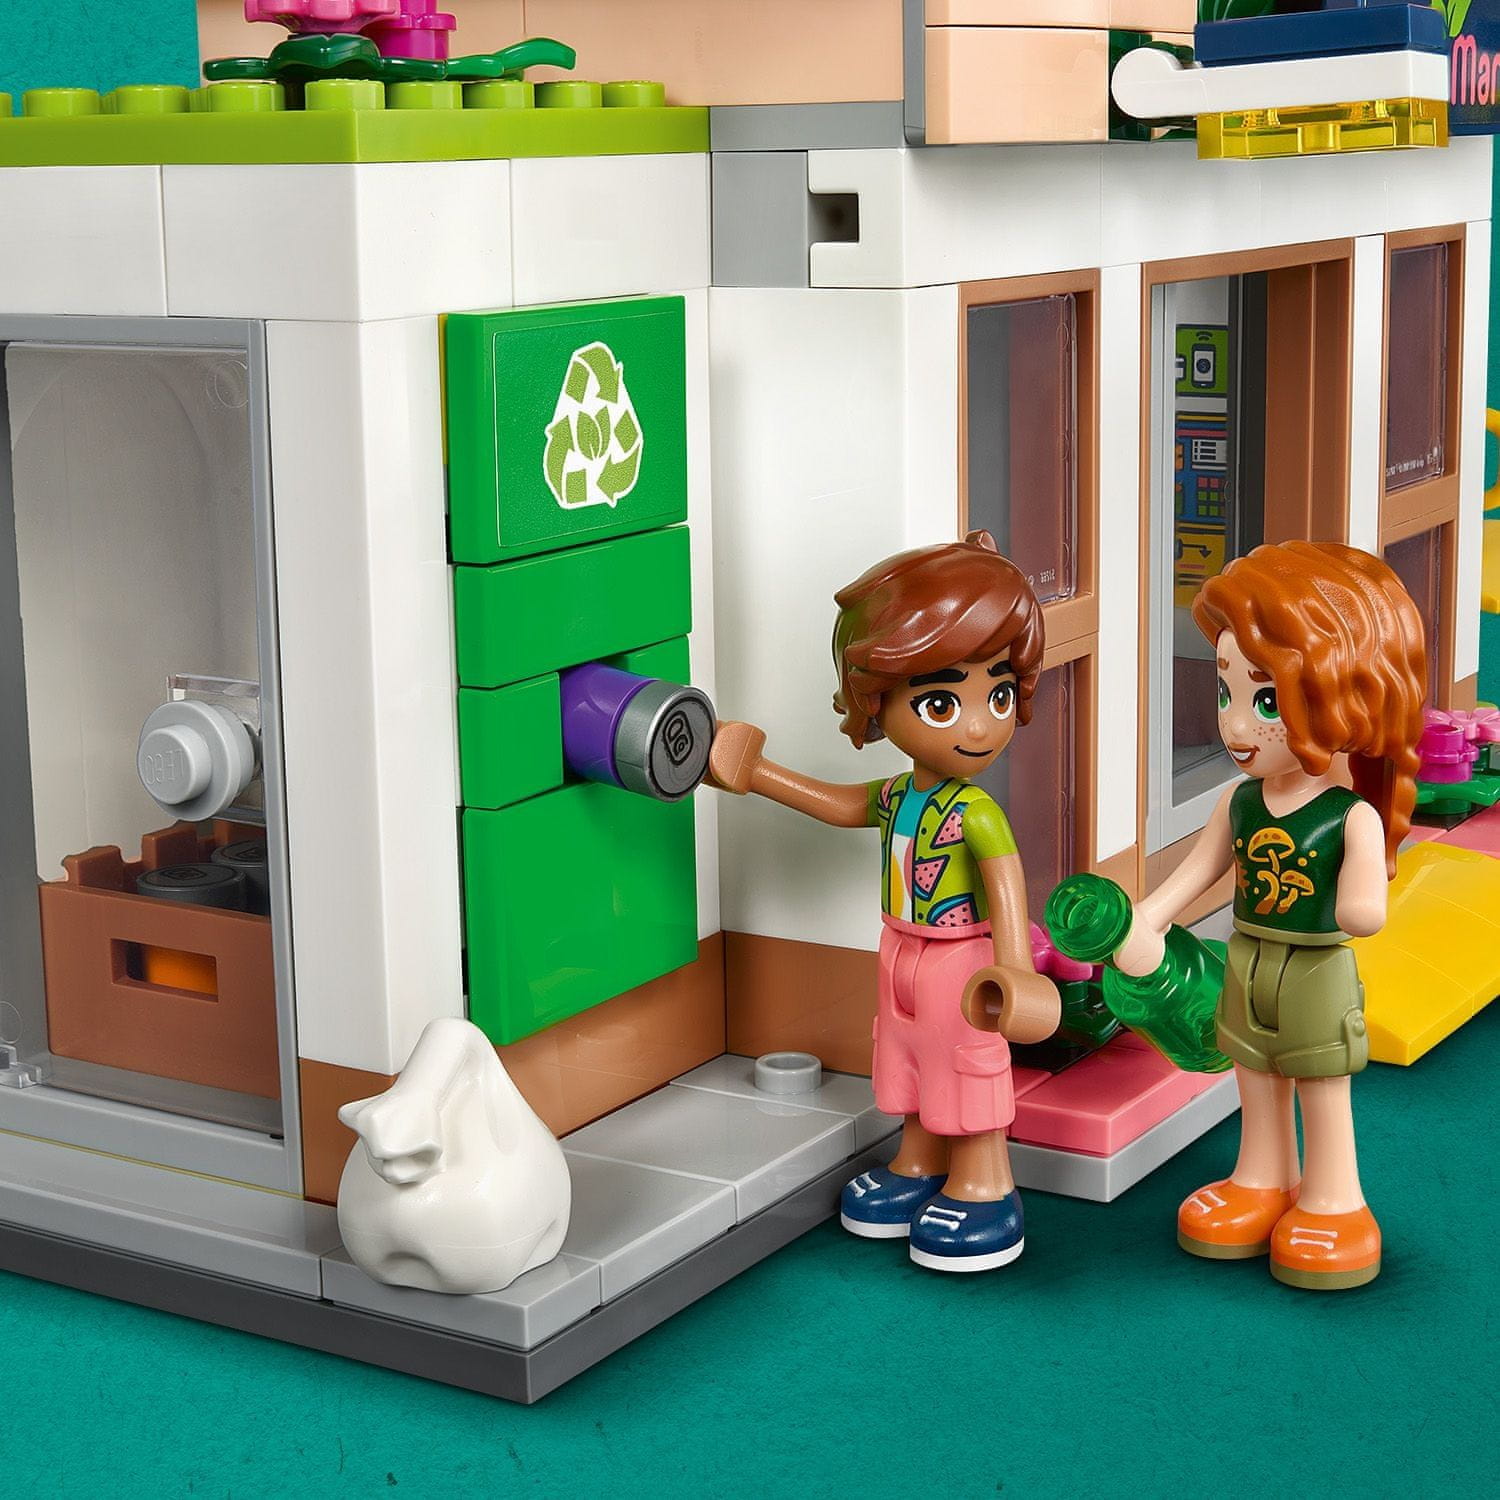 LEGO Friends 41729 Obchod s biopotravinami